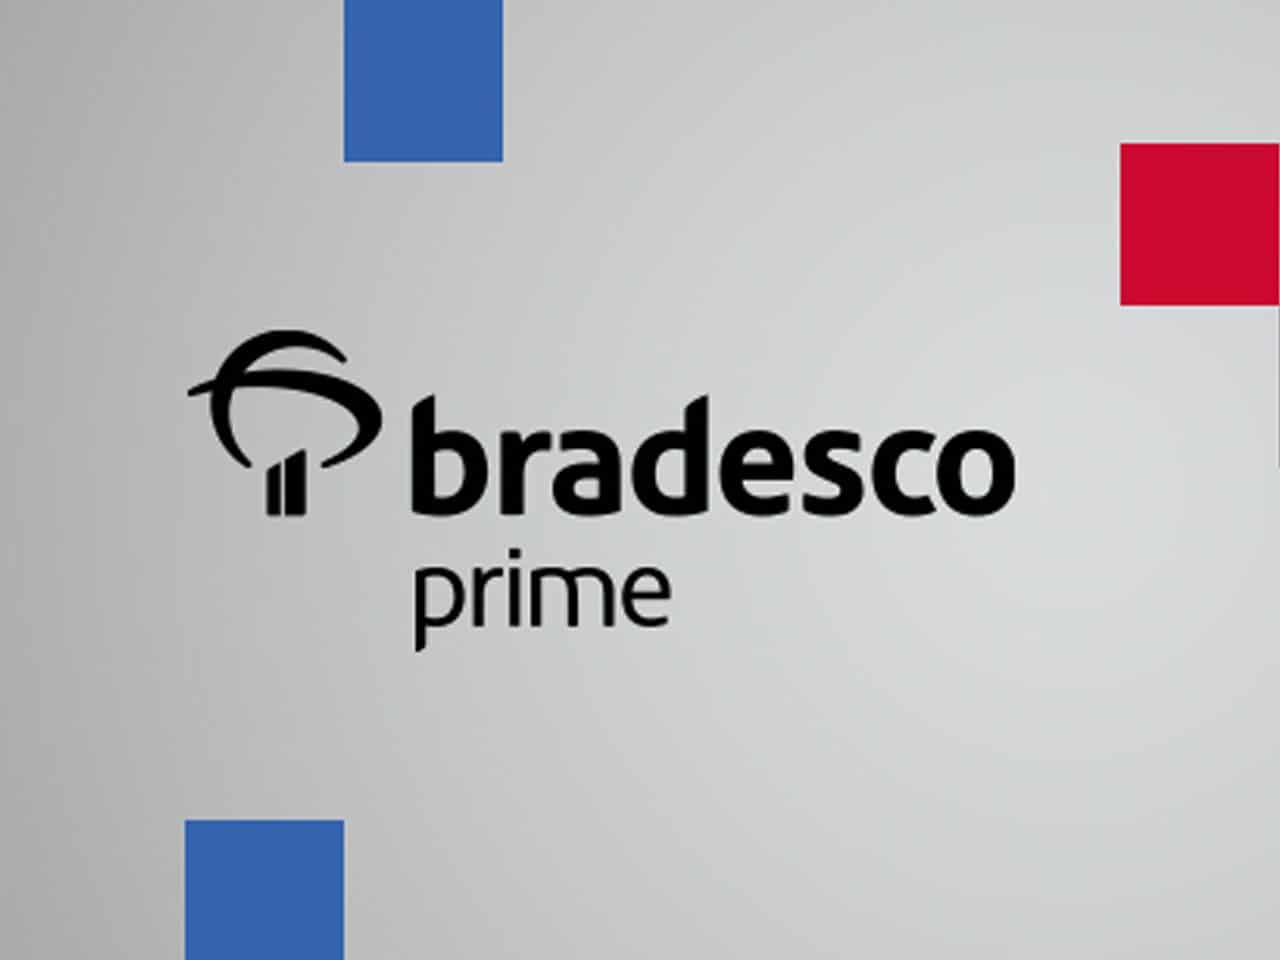 Bradesco Prime: Conheça os Benefícios Exclusivos do Segmento